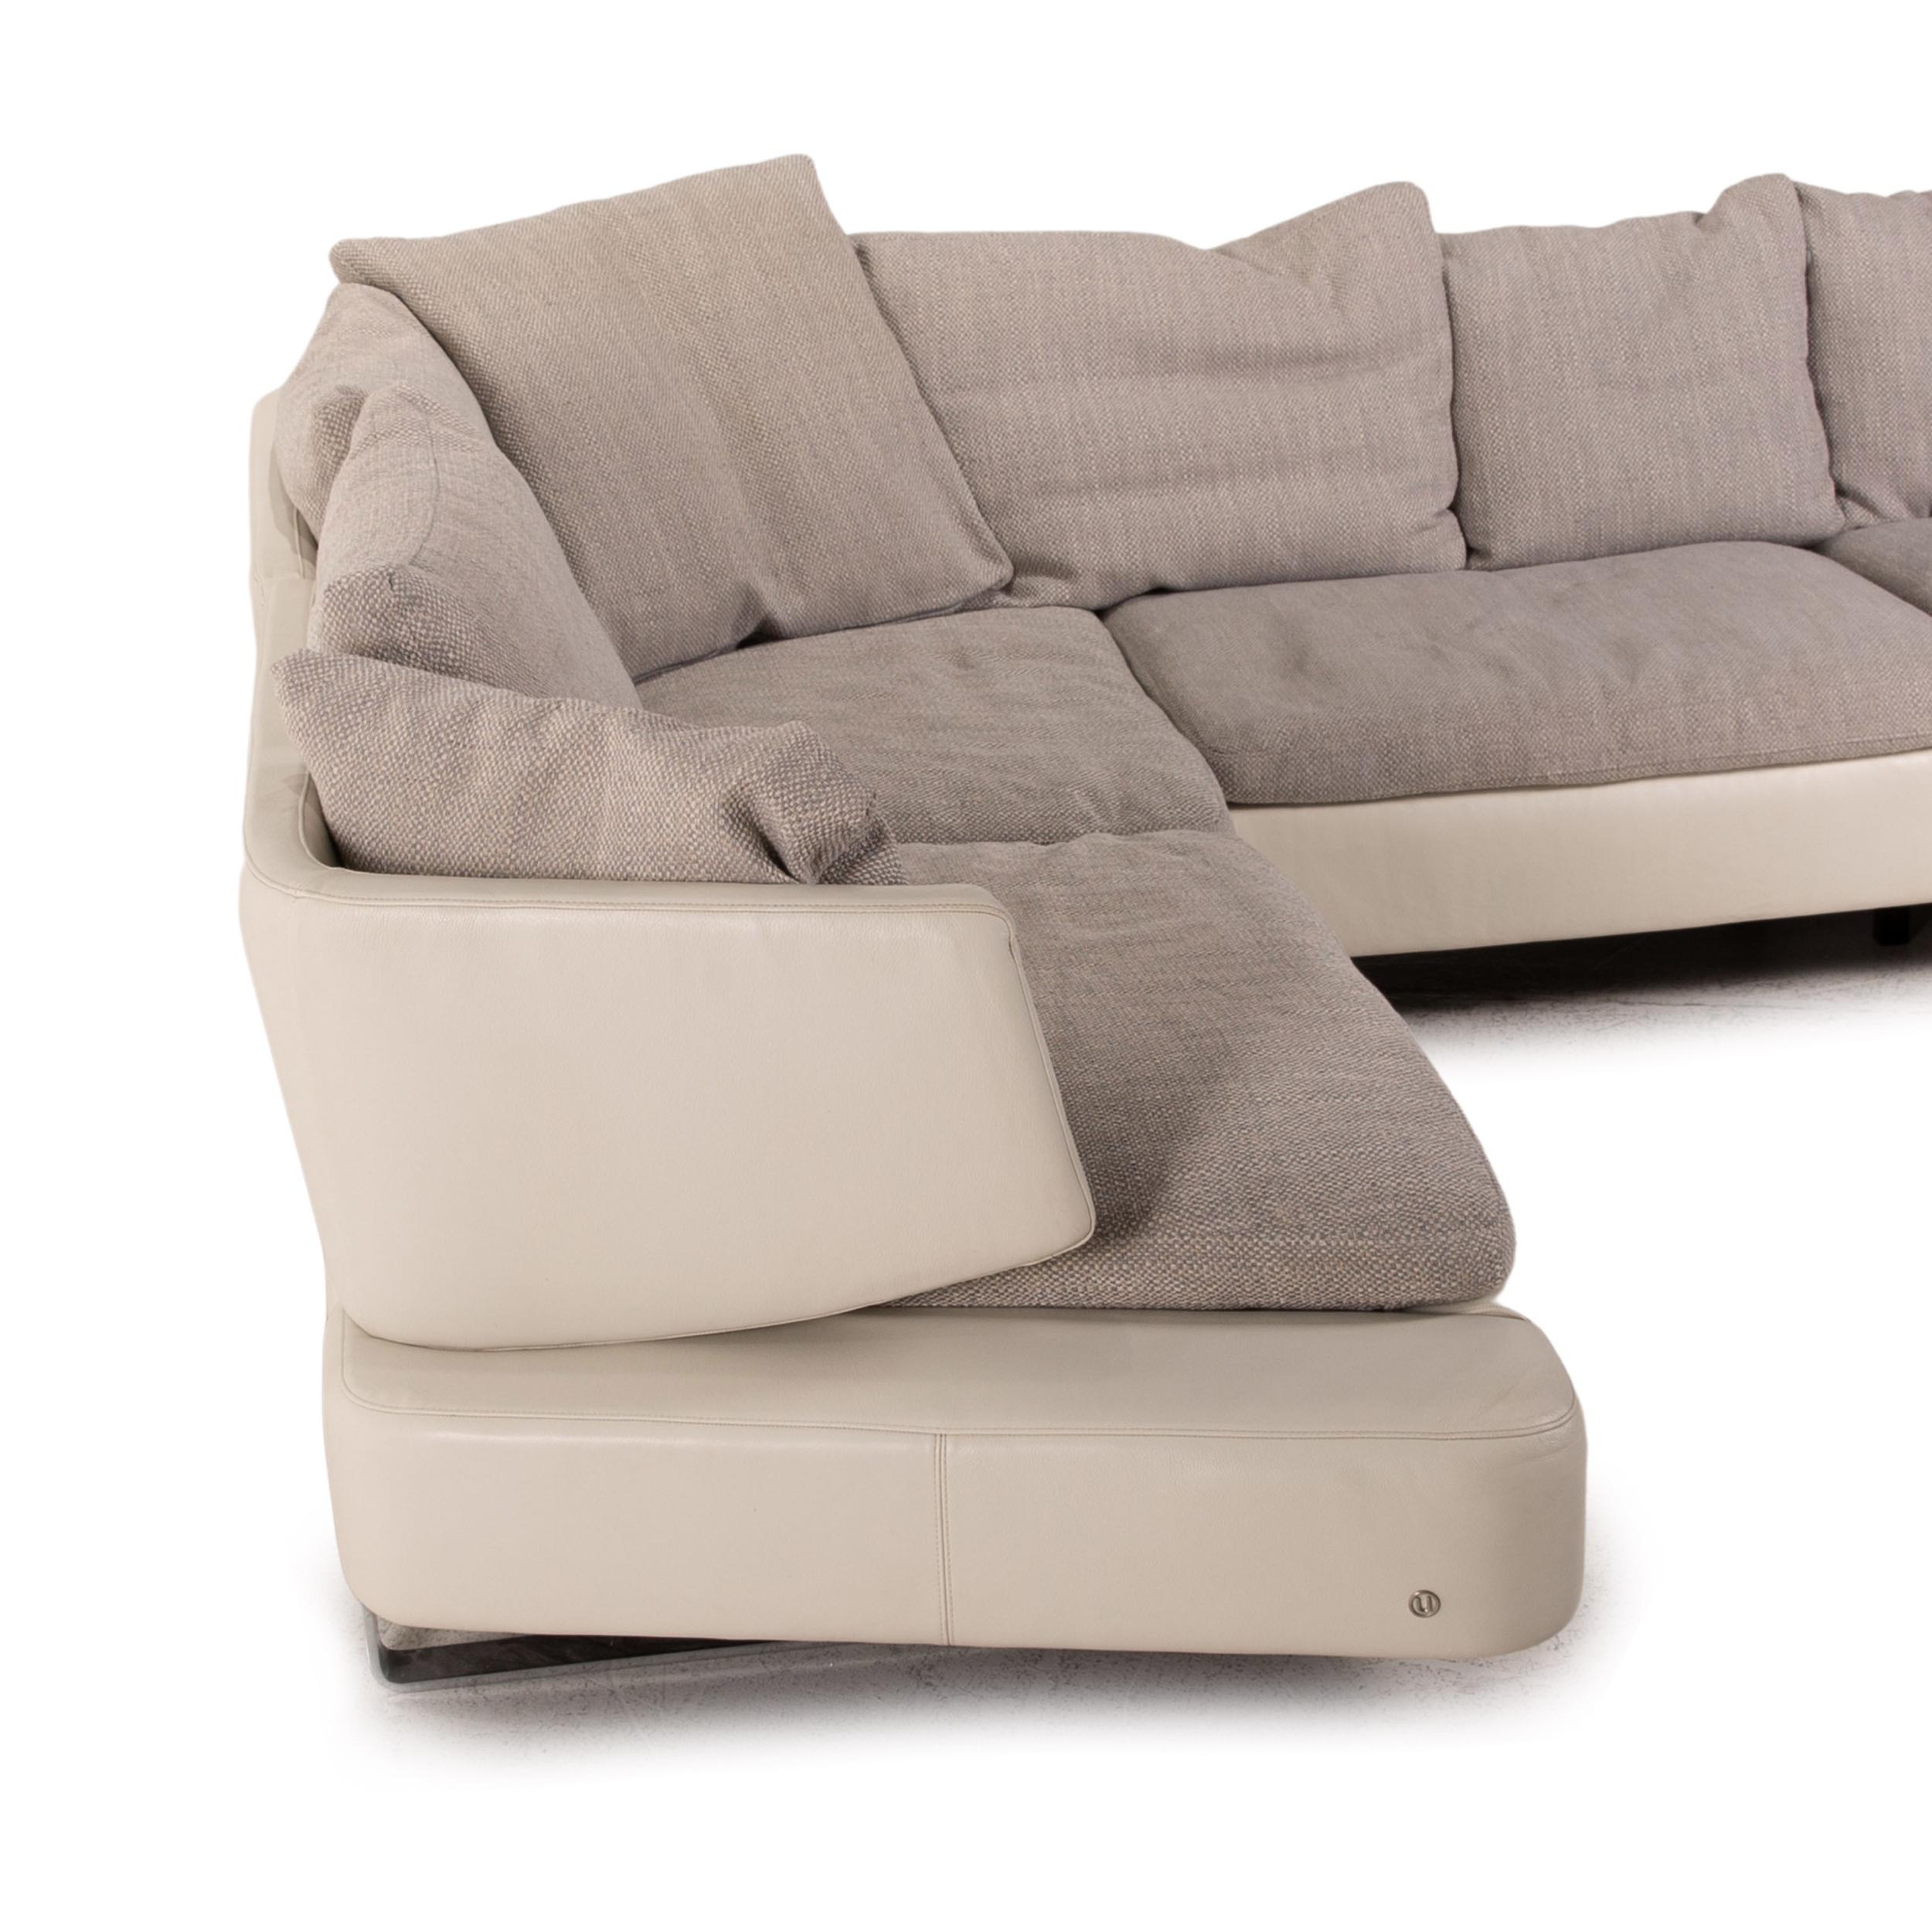 Natuzzi Opus Leather Fabric Corner Sofa Gray Cream Sofa Couch For Sale 1